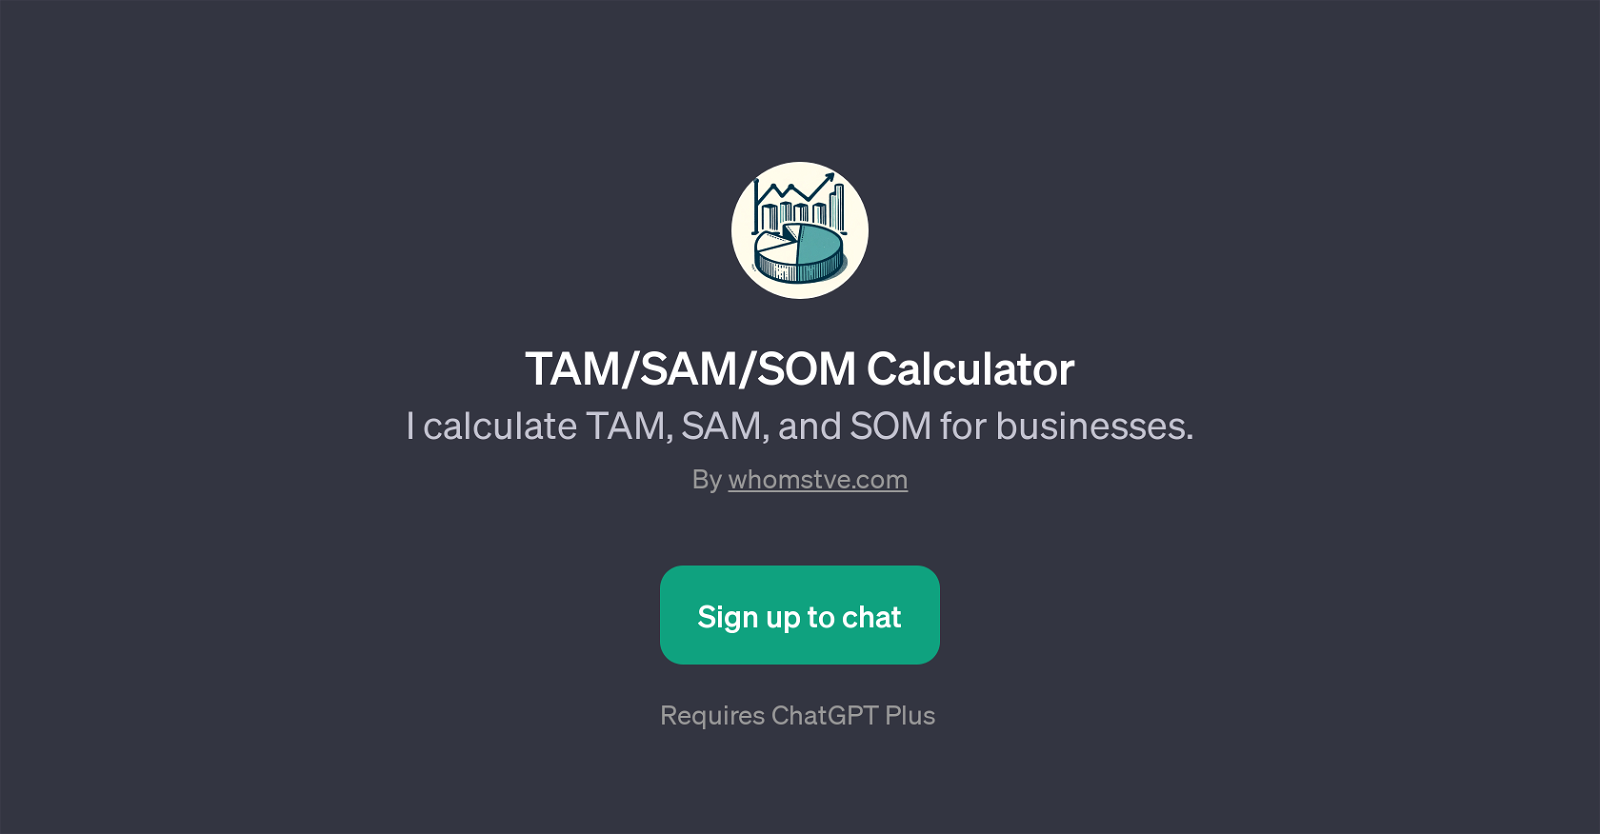 TAM/SAM/SOM Calculator website